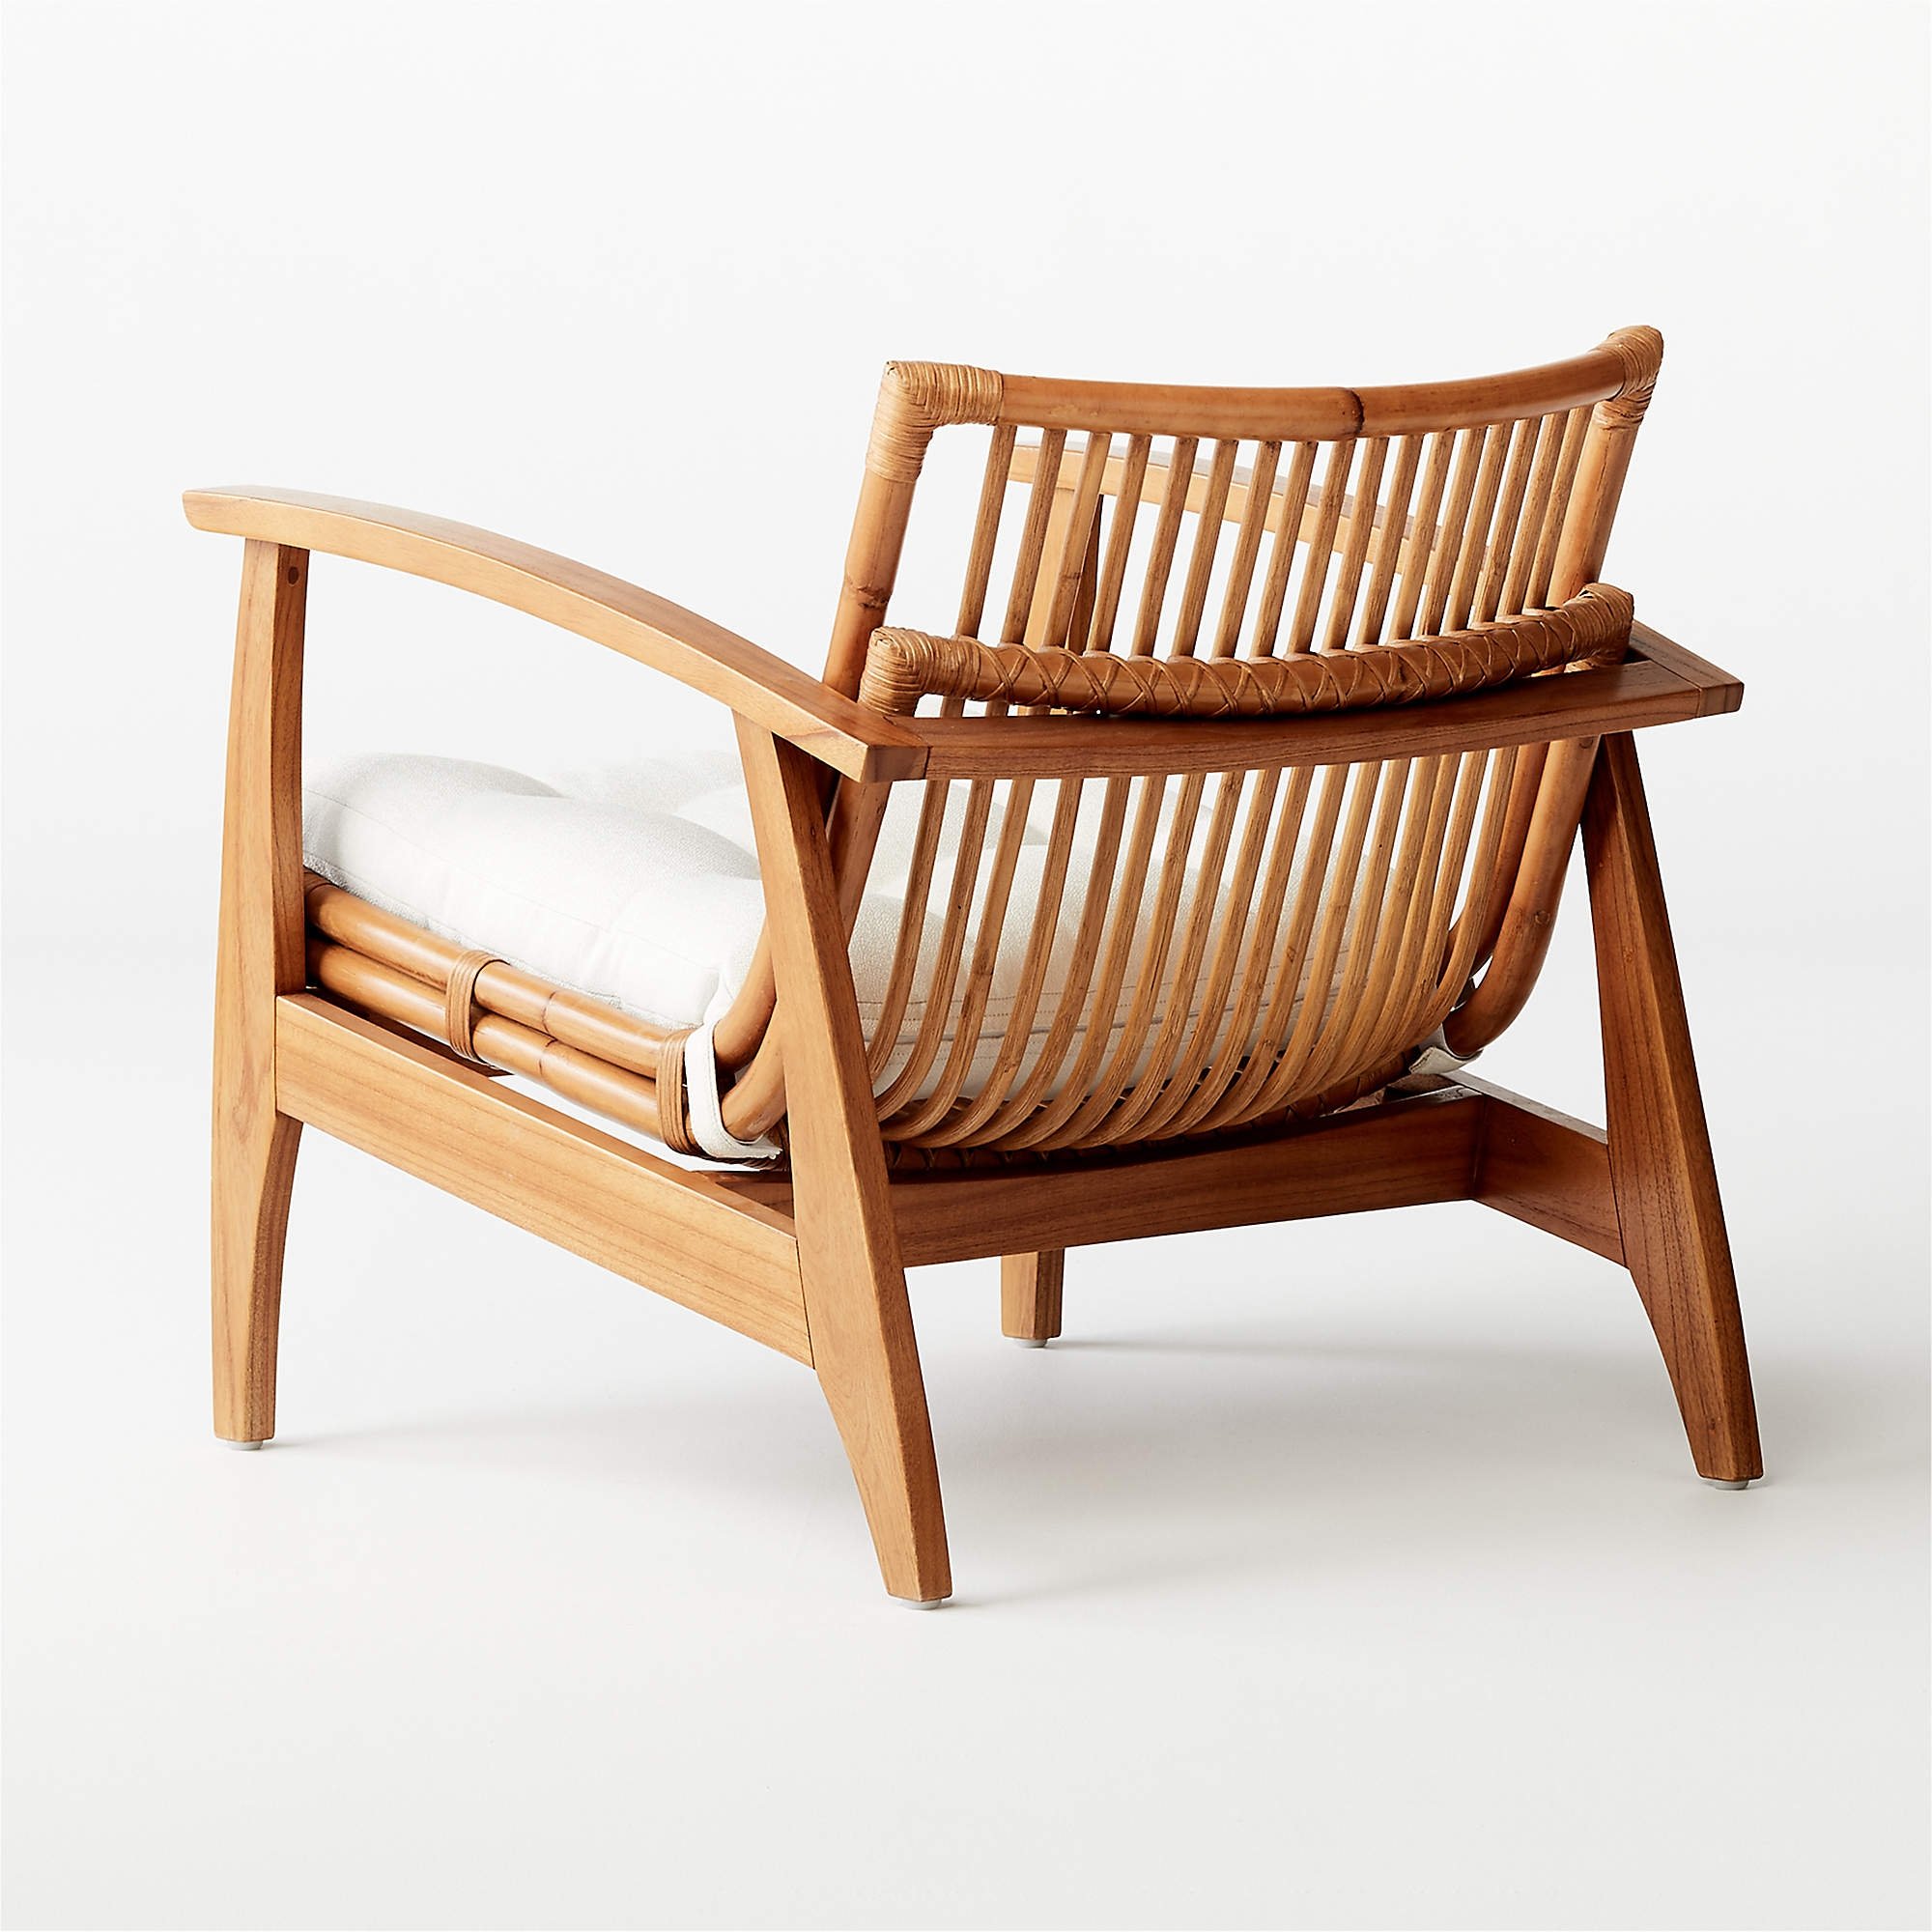 Noelie Rattan Lounge Chair with White Cushion, Mikkeli White - Image 6